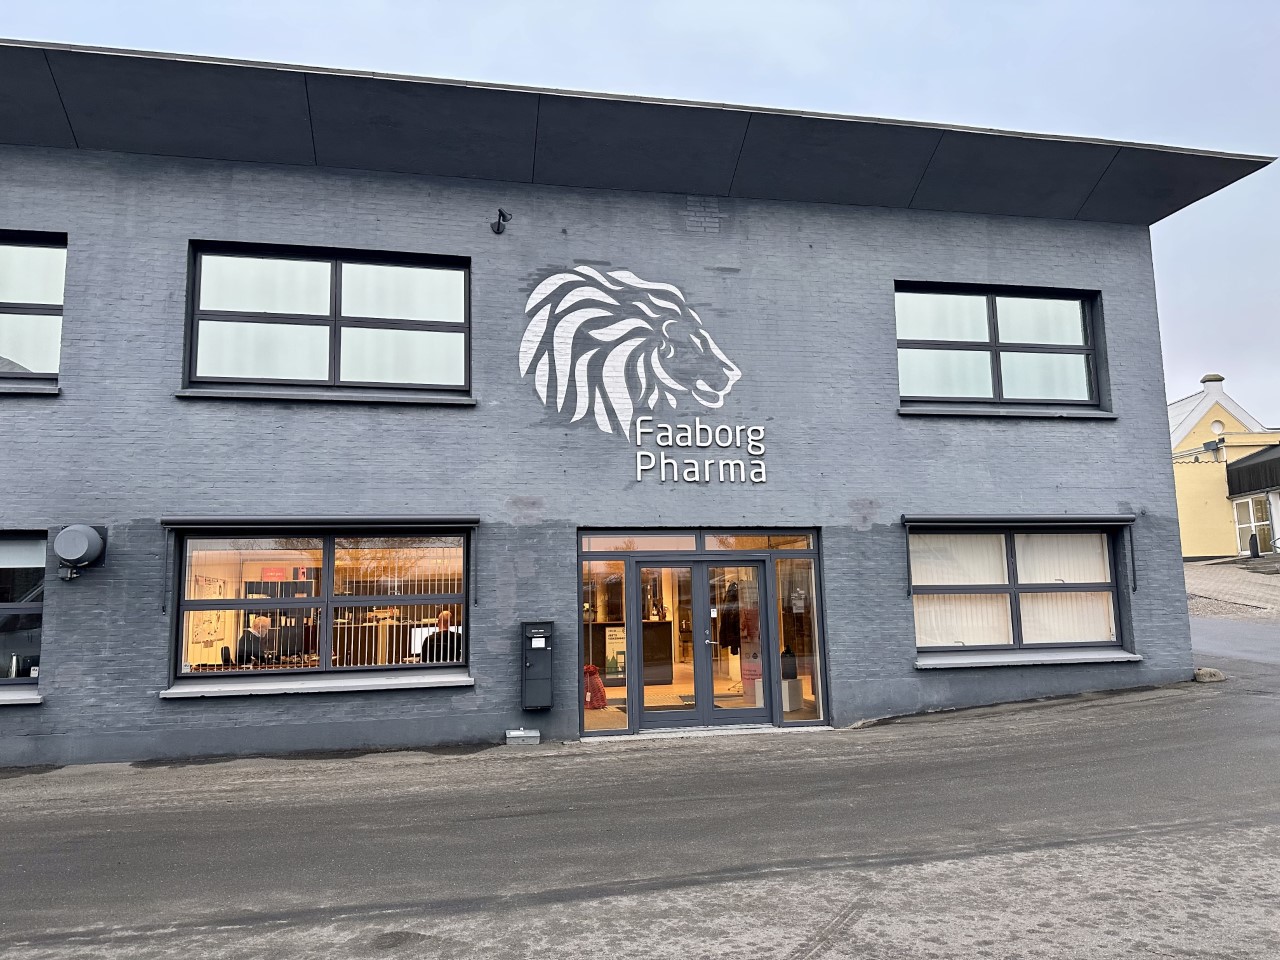 Bygningsfacade med løve logo hos den farmaceutiske virksomhed Faaborg Pharma på Sydfyn